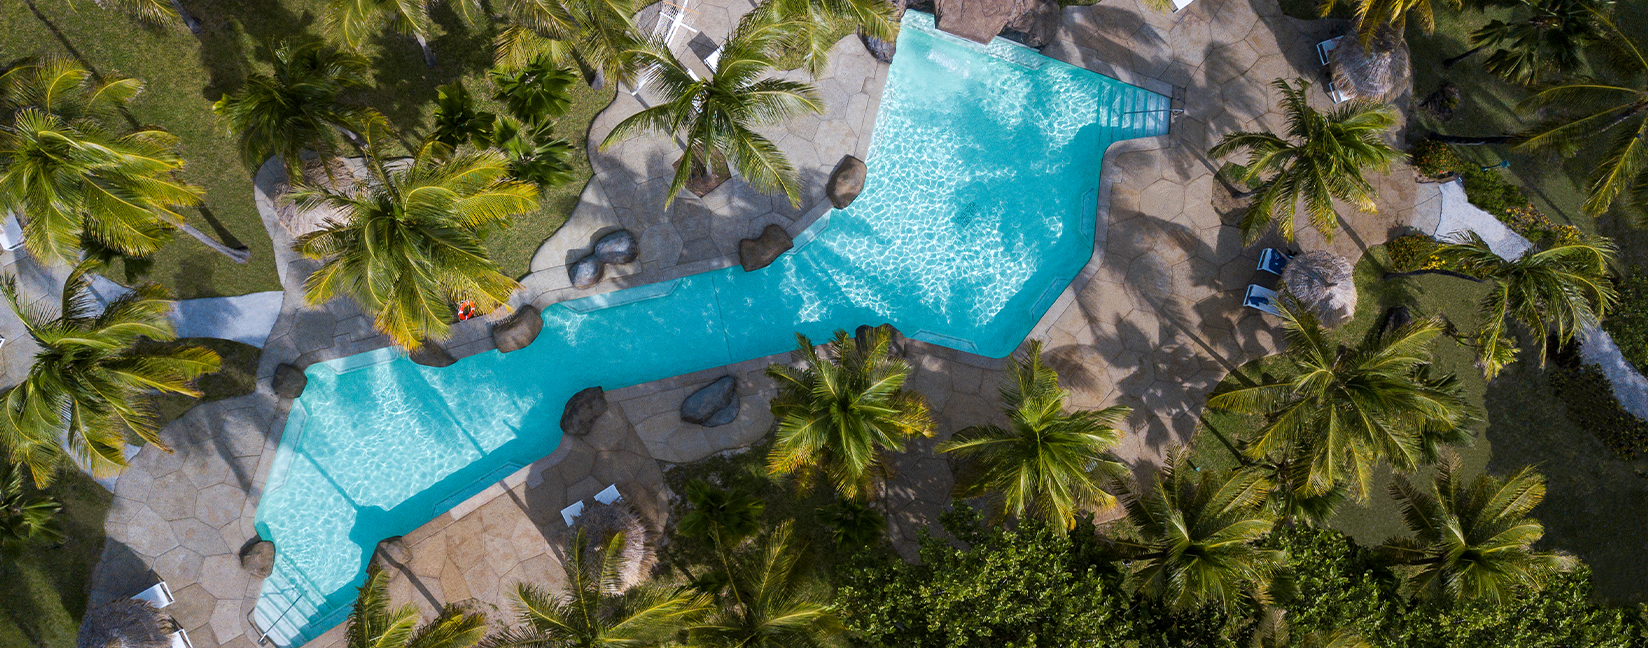 Palm Island Resort Offers